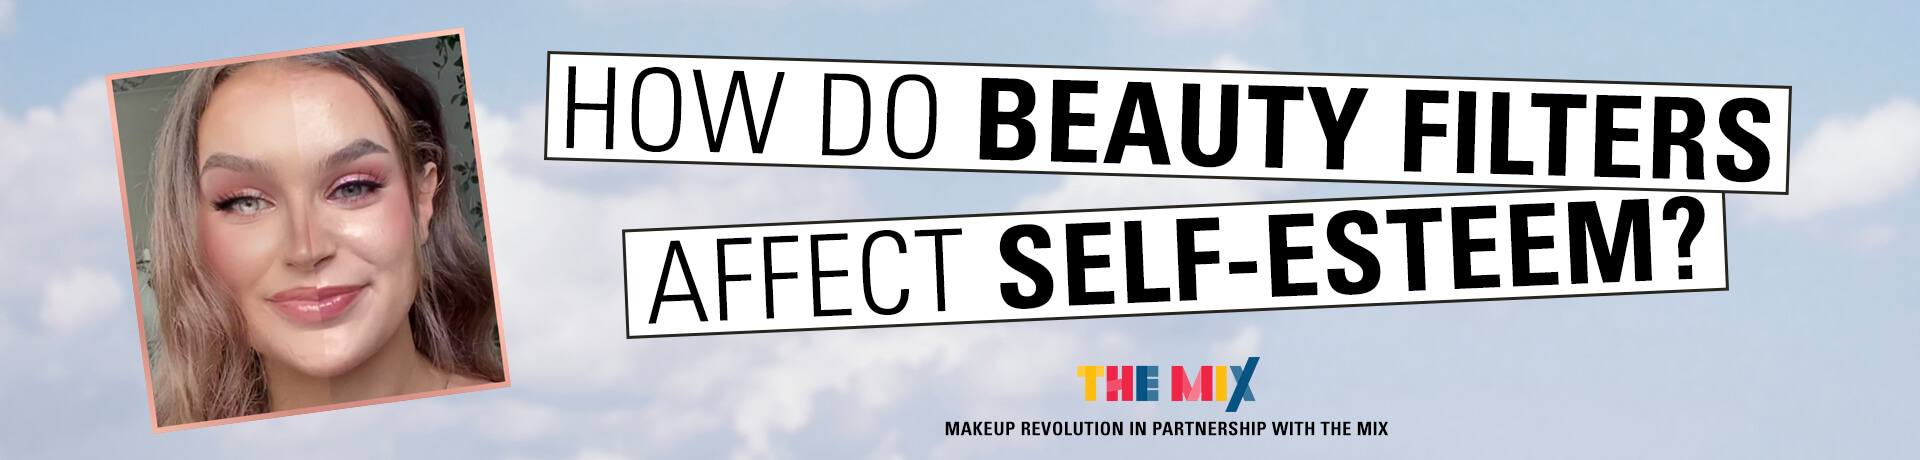 How Do Beauty Filters Affect Self-Esteem?